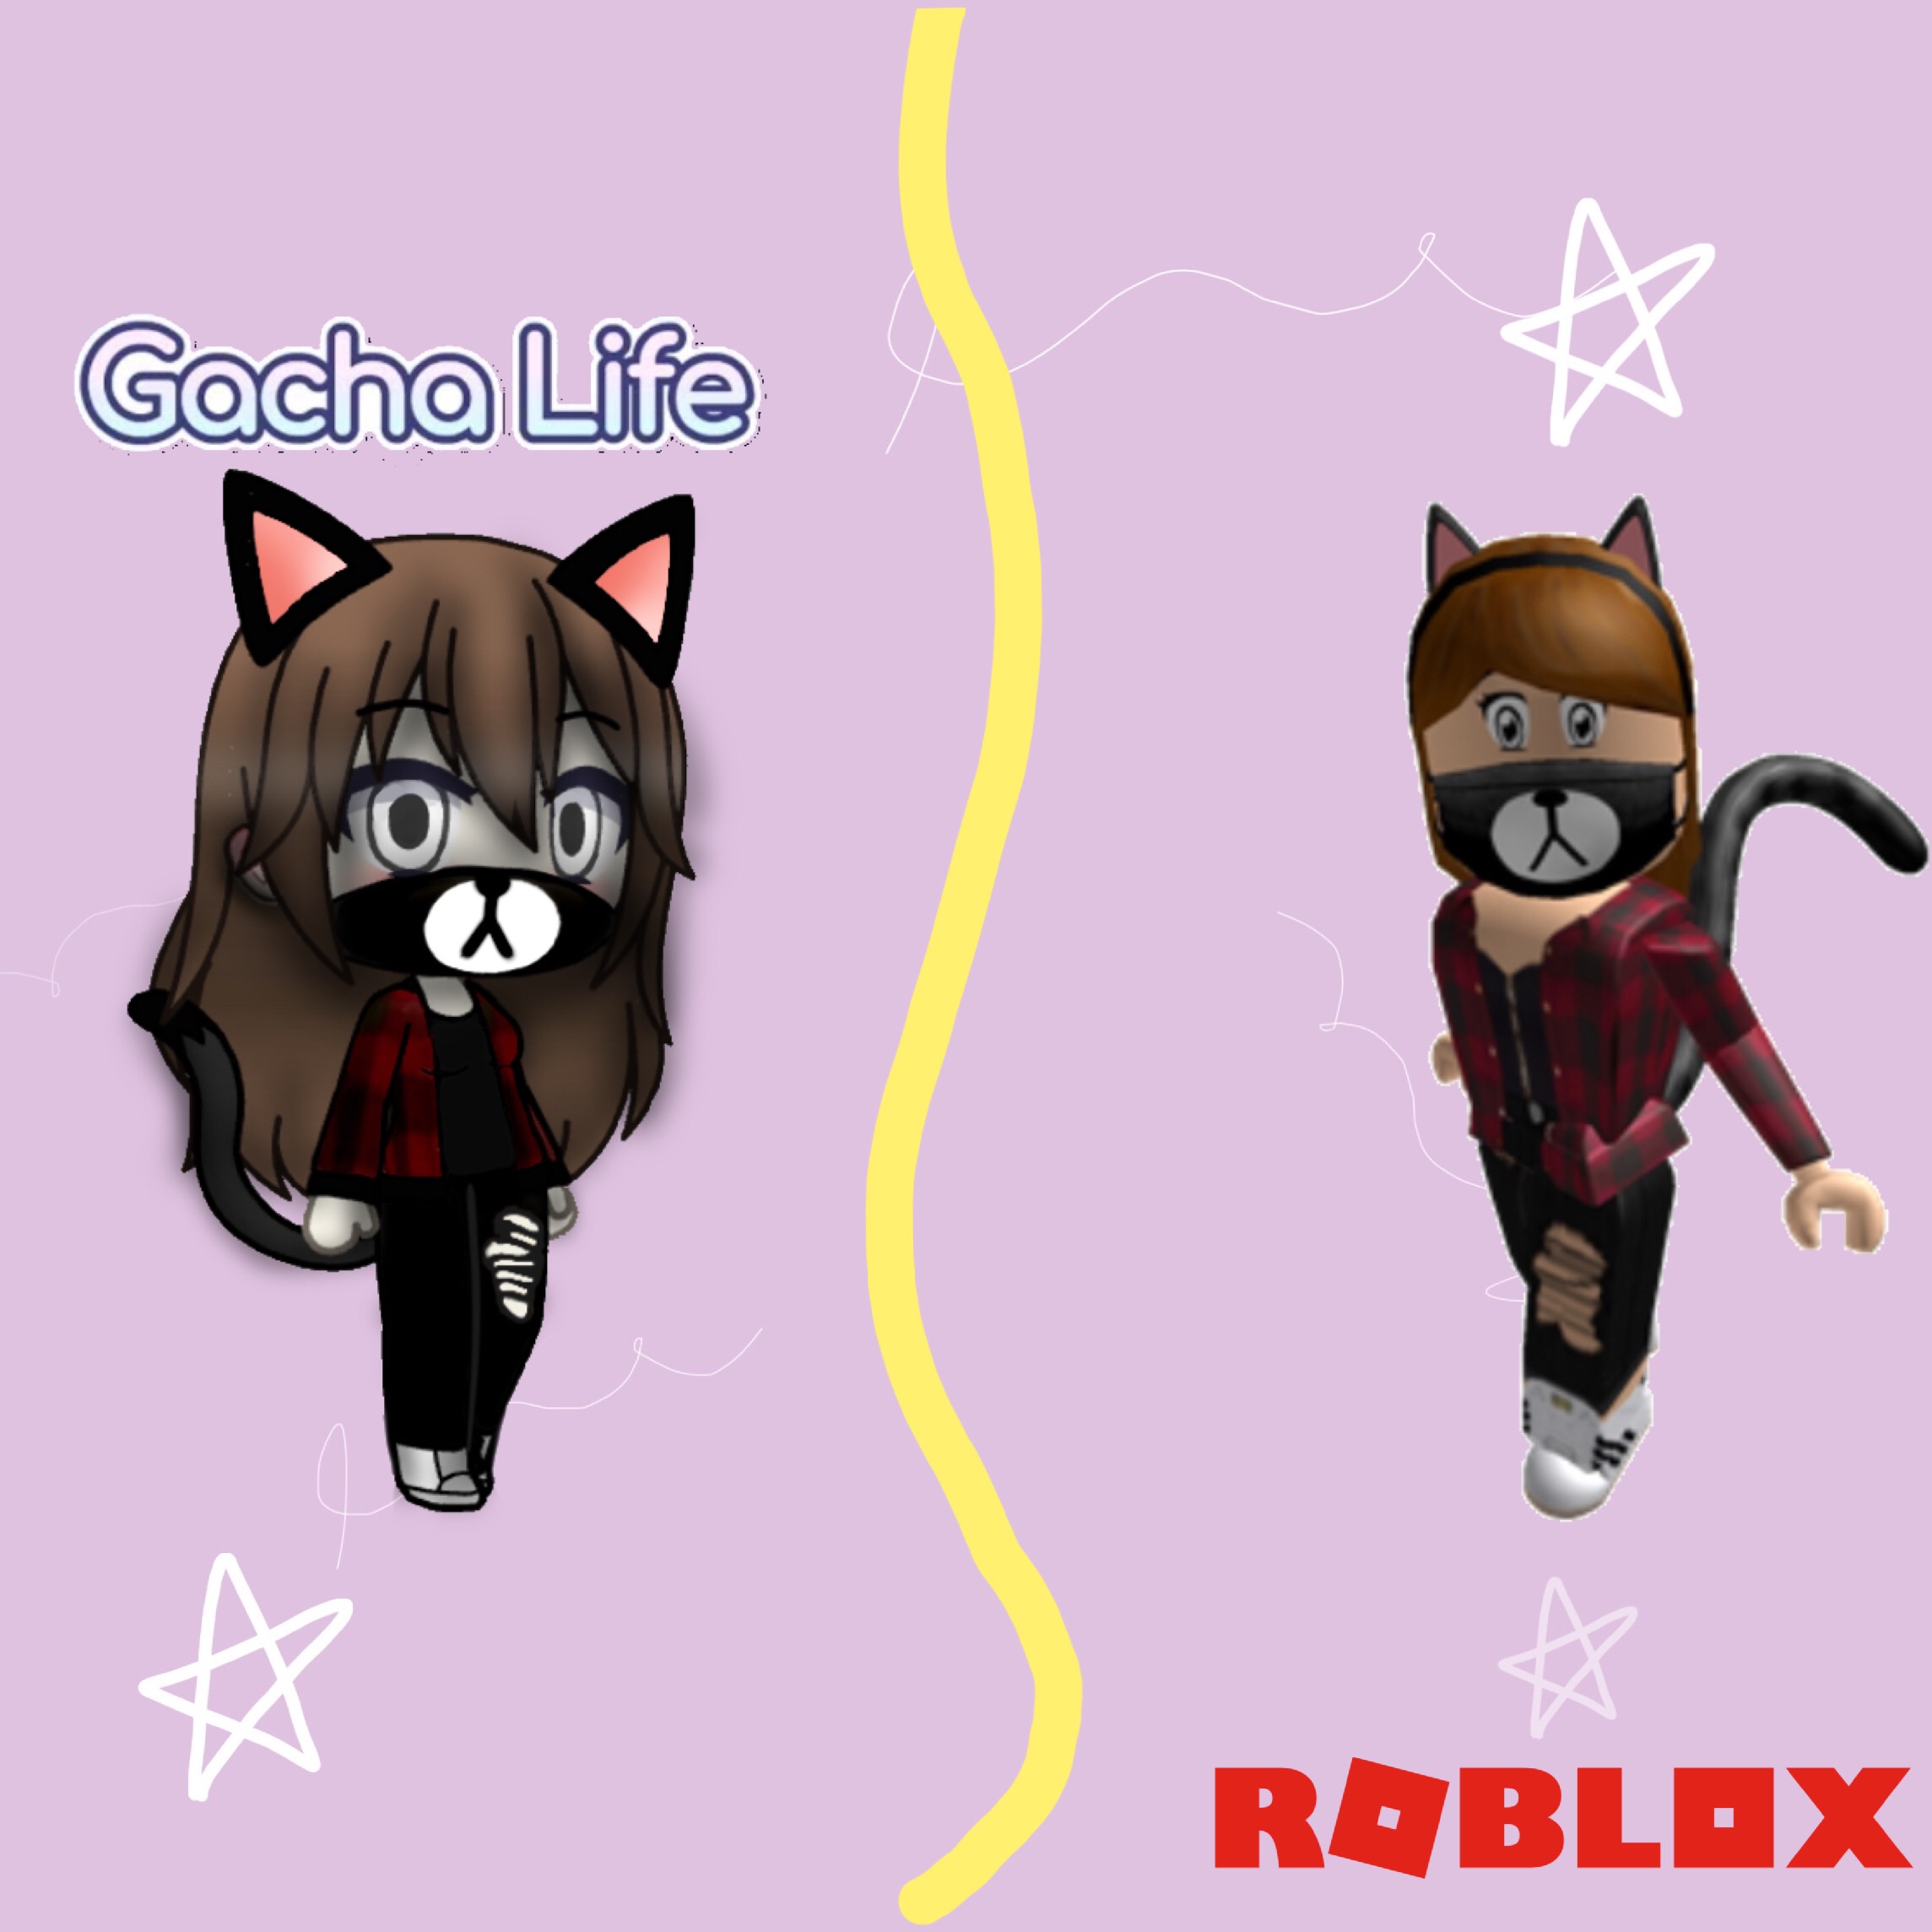 Roblox Gachalife Gacha Life Vs Roblox Image By Mochi